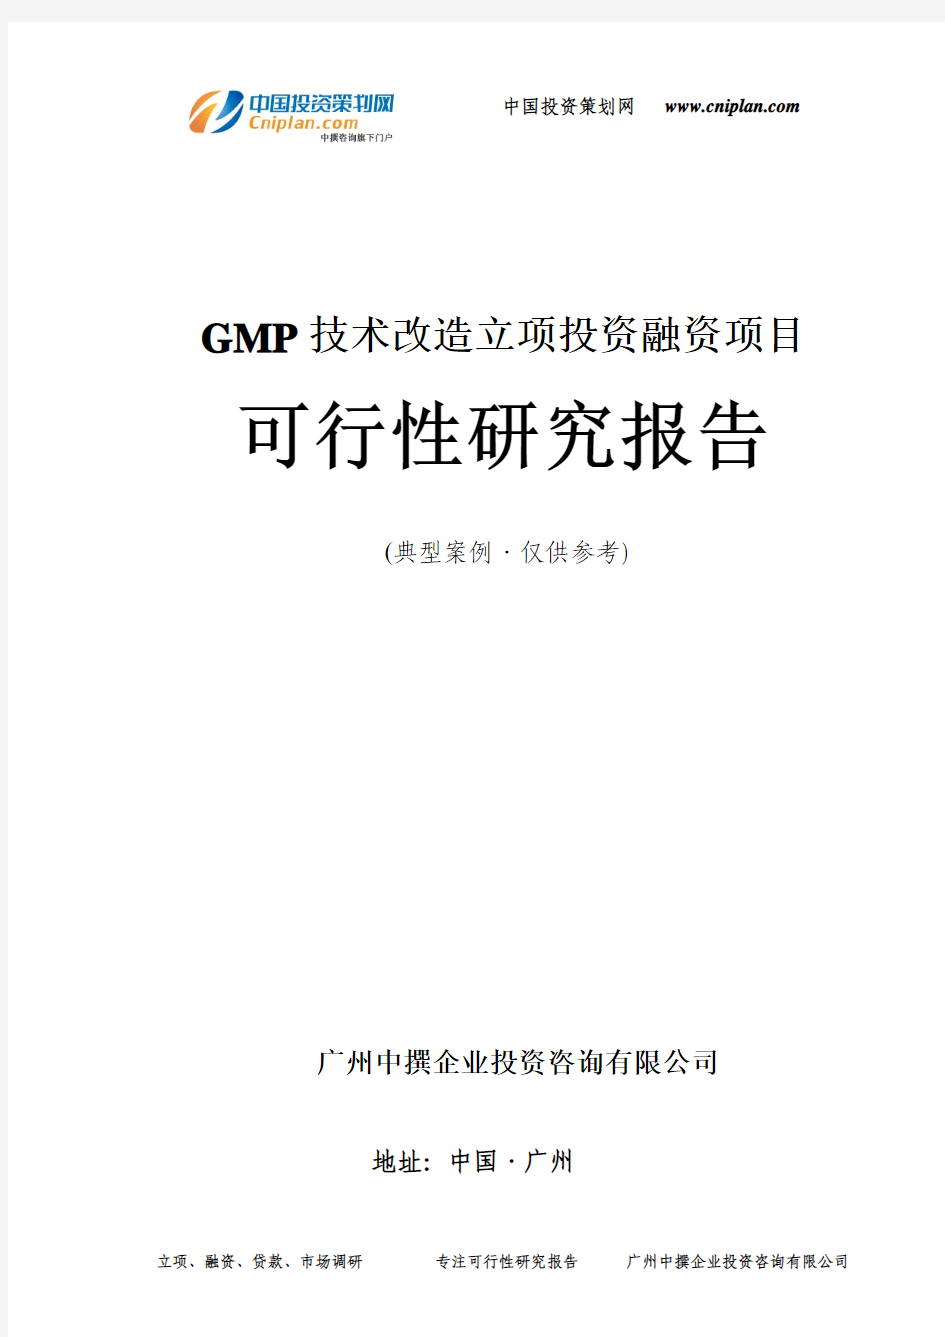 GMP技术改造融资投资立项项目可行性研究报告(中撰咨询)